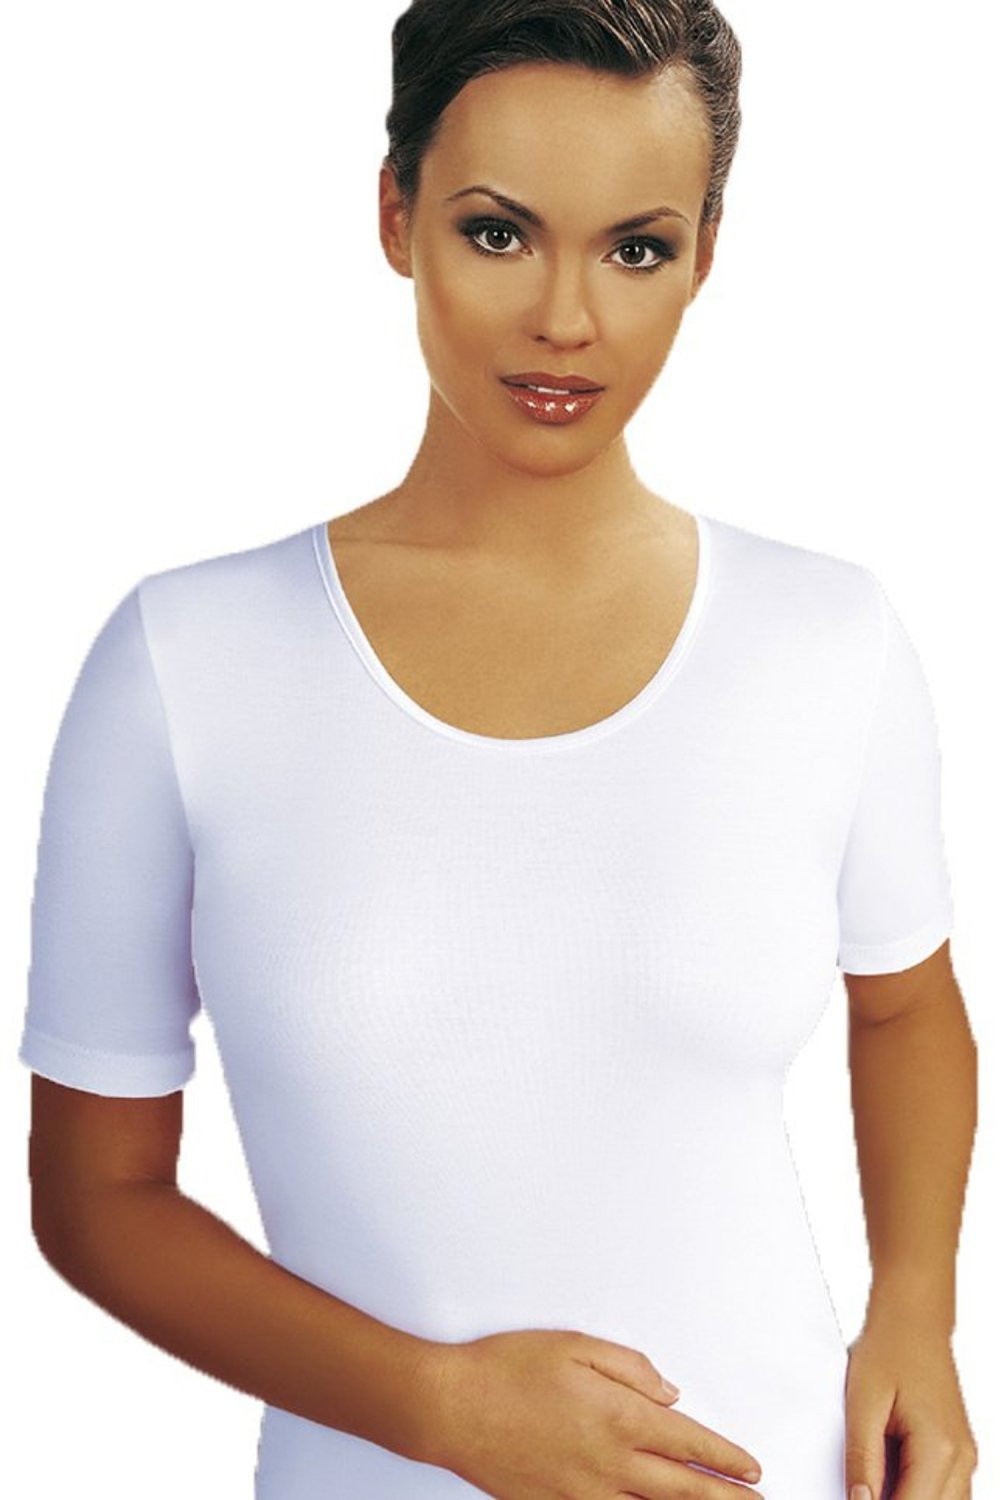 Dámské tričko Nina white model 16300266 XL - Emili